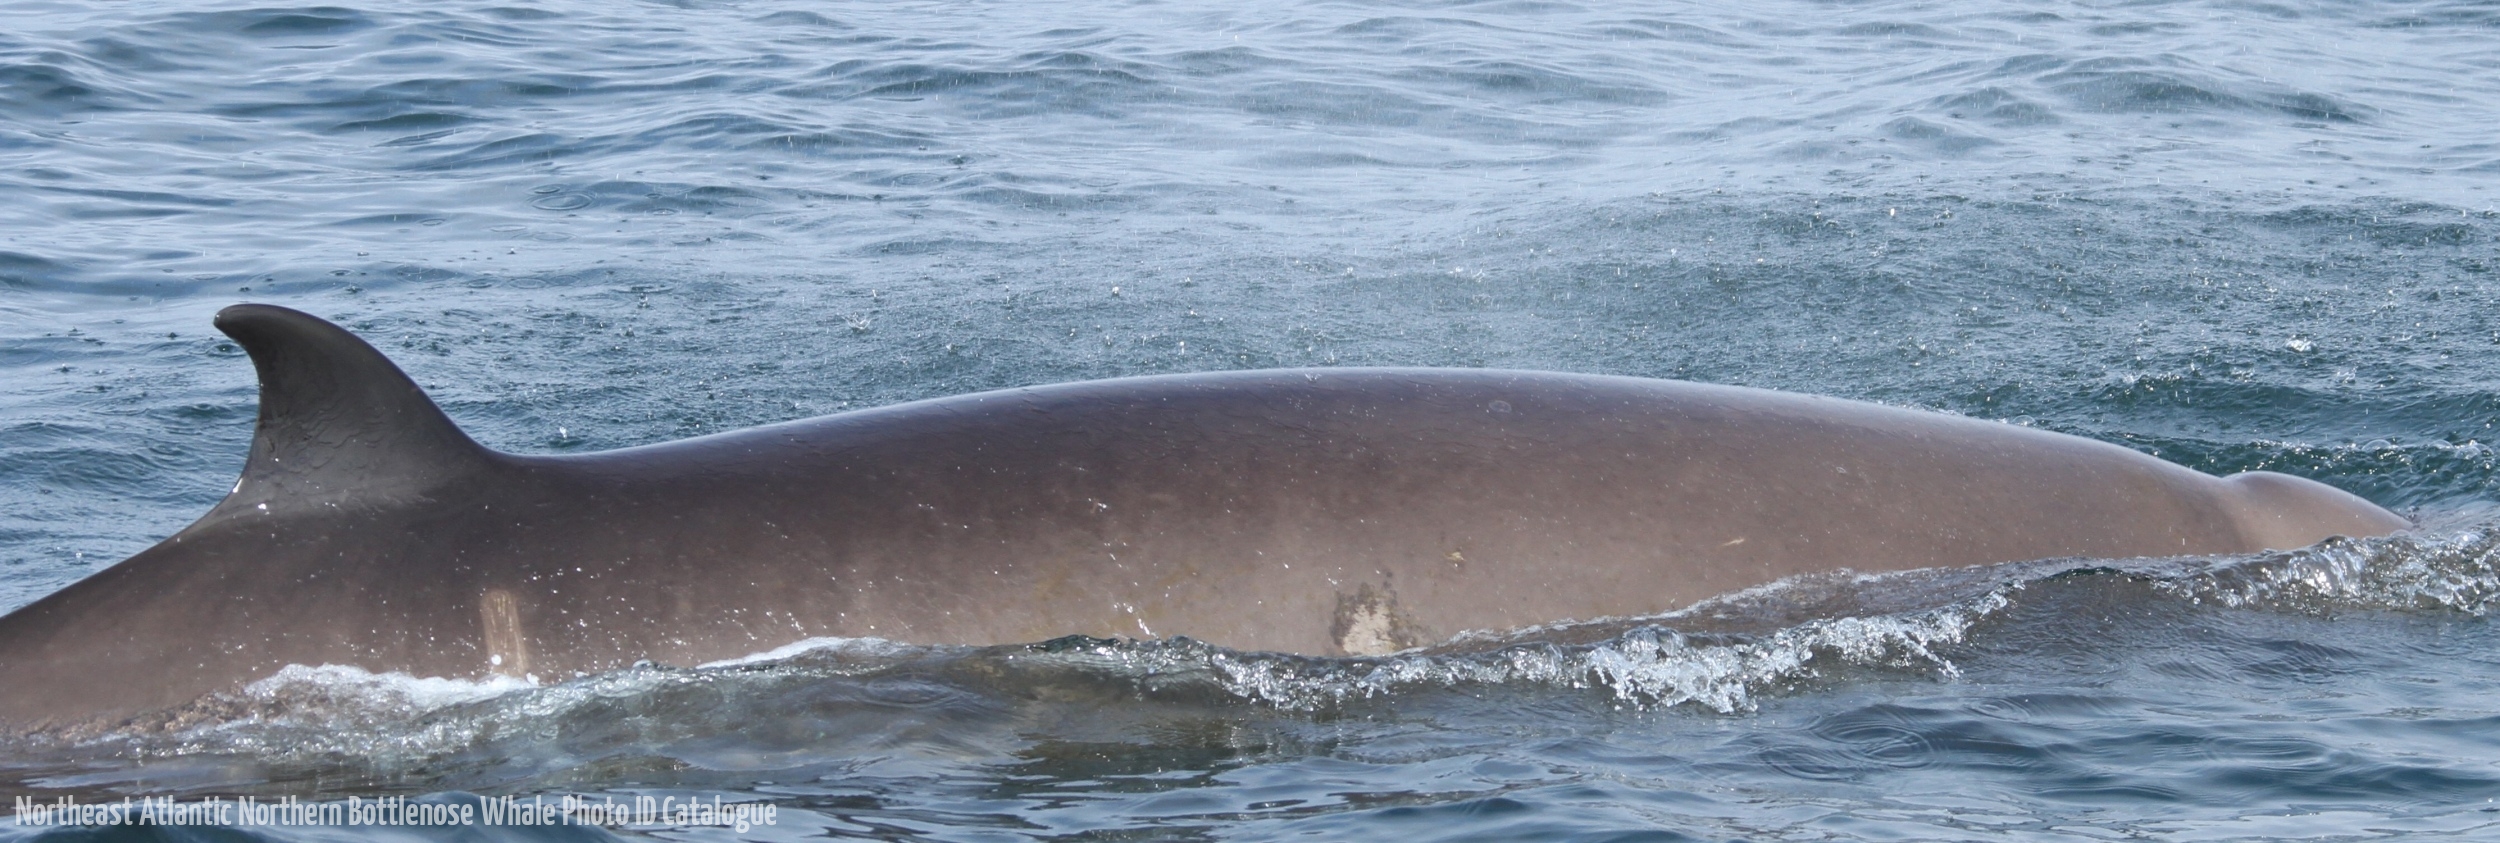 Whale ID: 0259,  Date taken: 24-06-2013,  Photographer: Paul H. Ensor